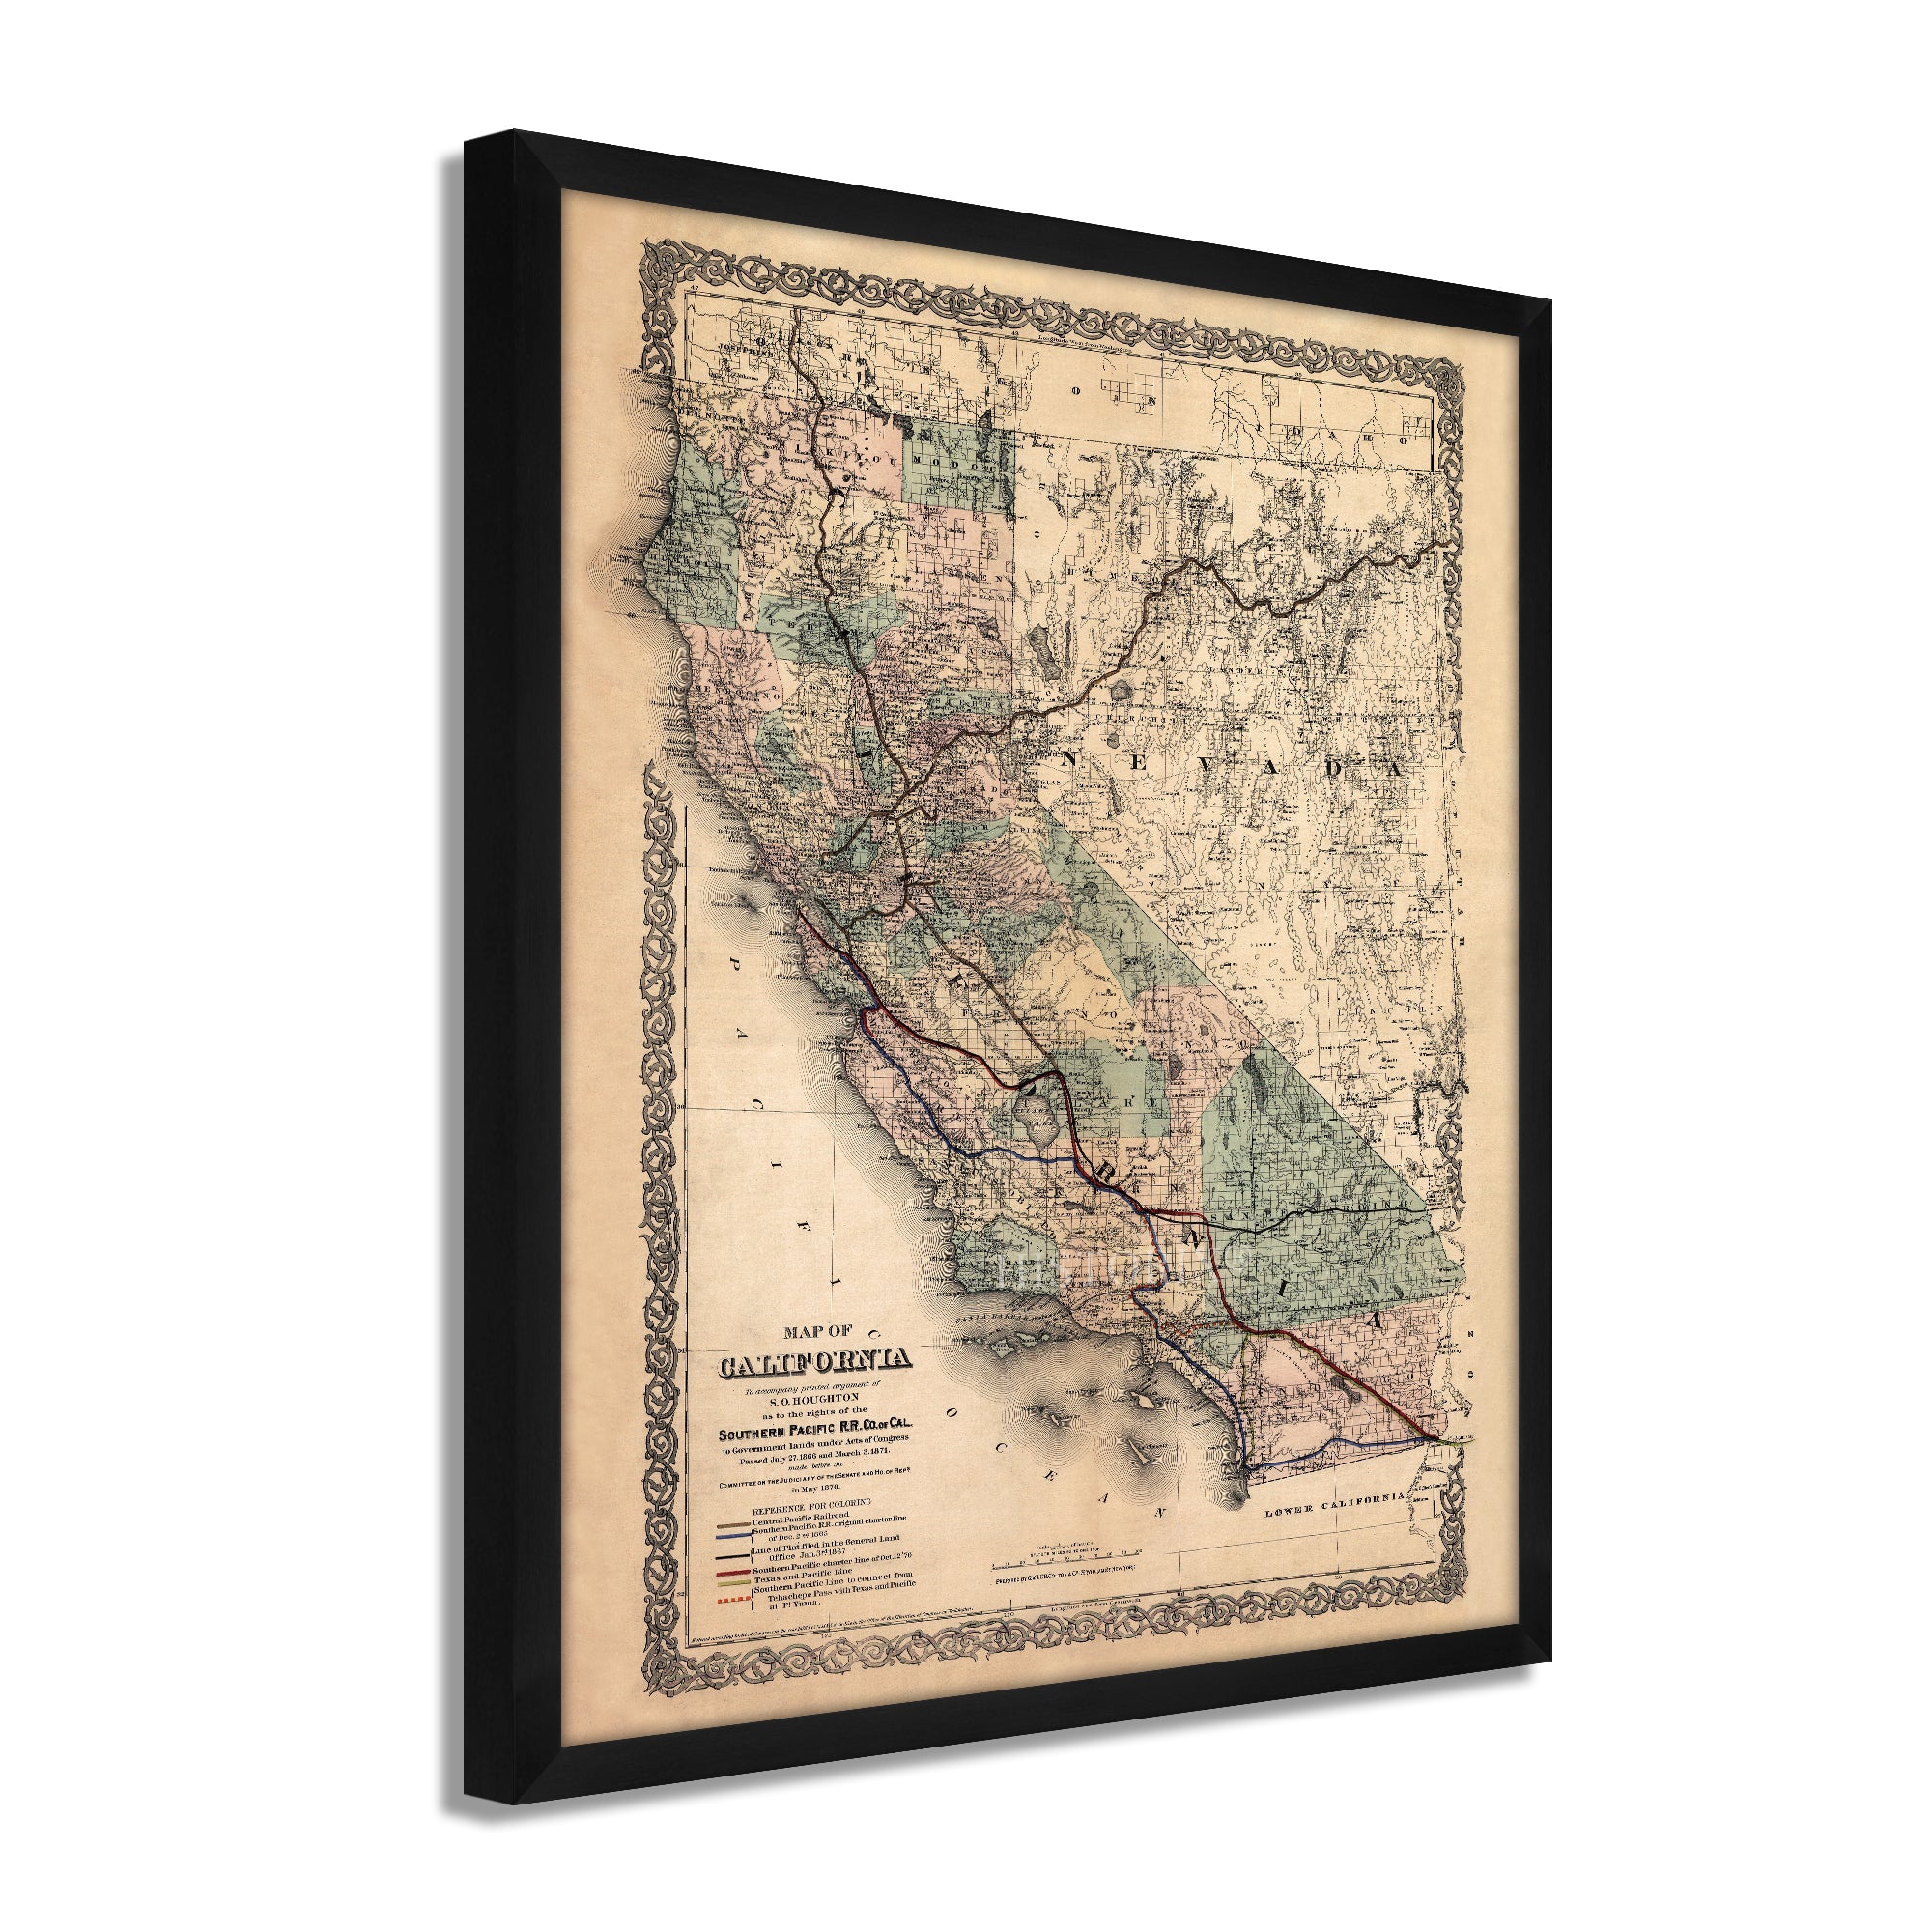 coloring map of california